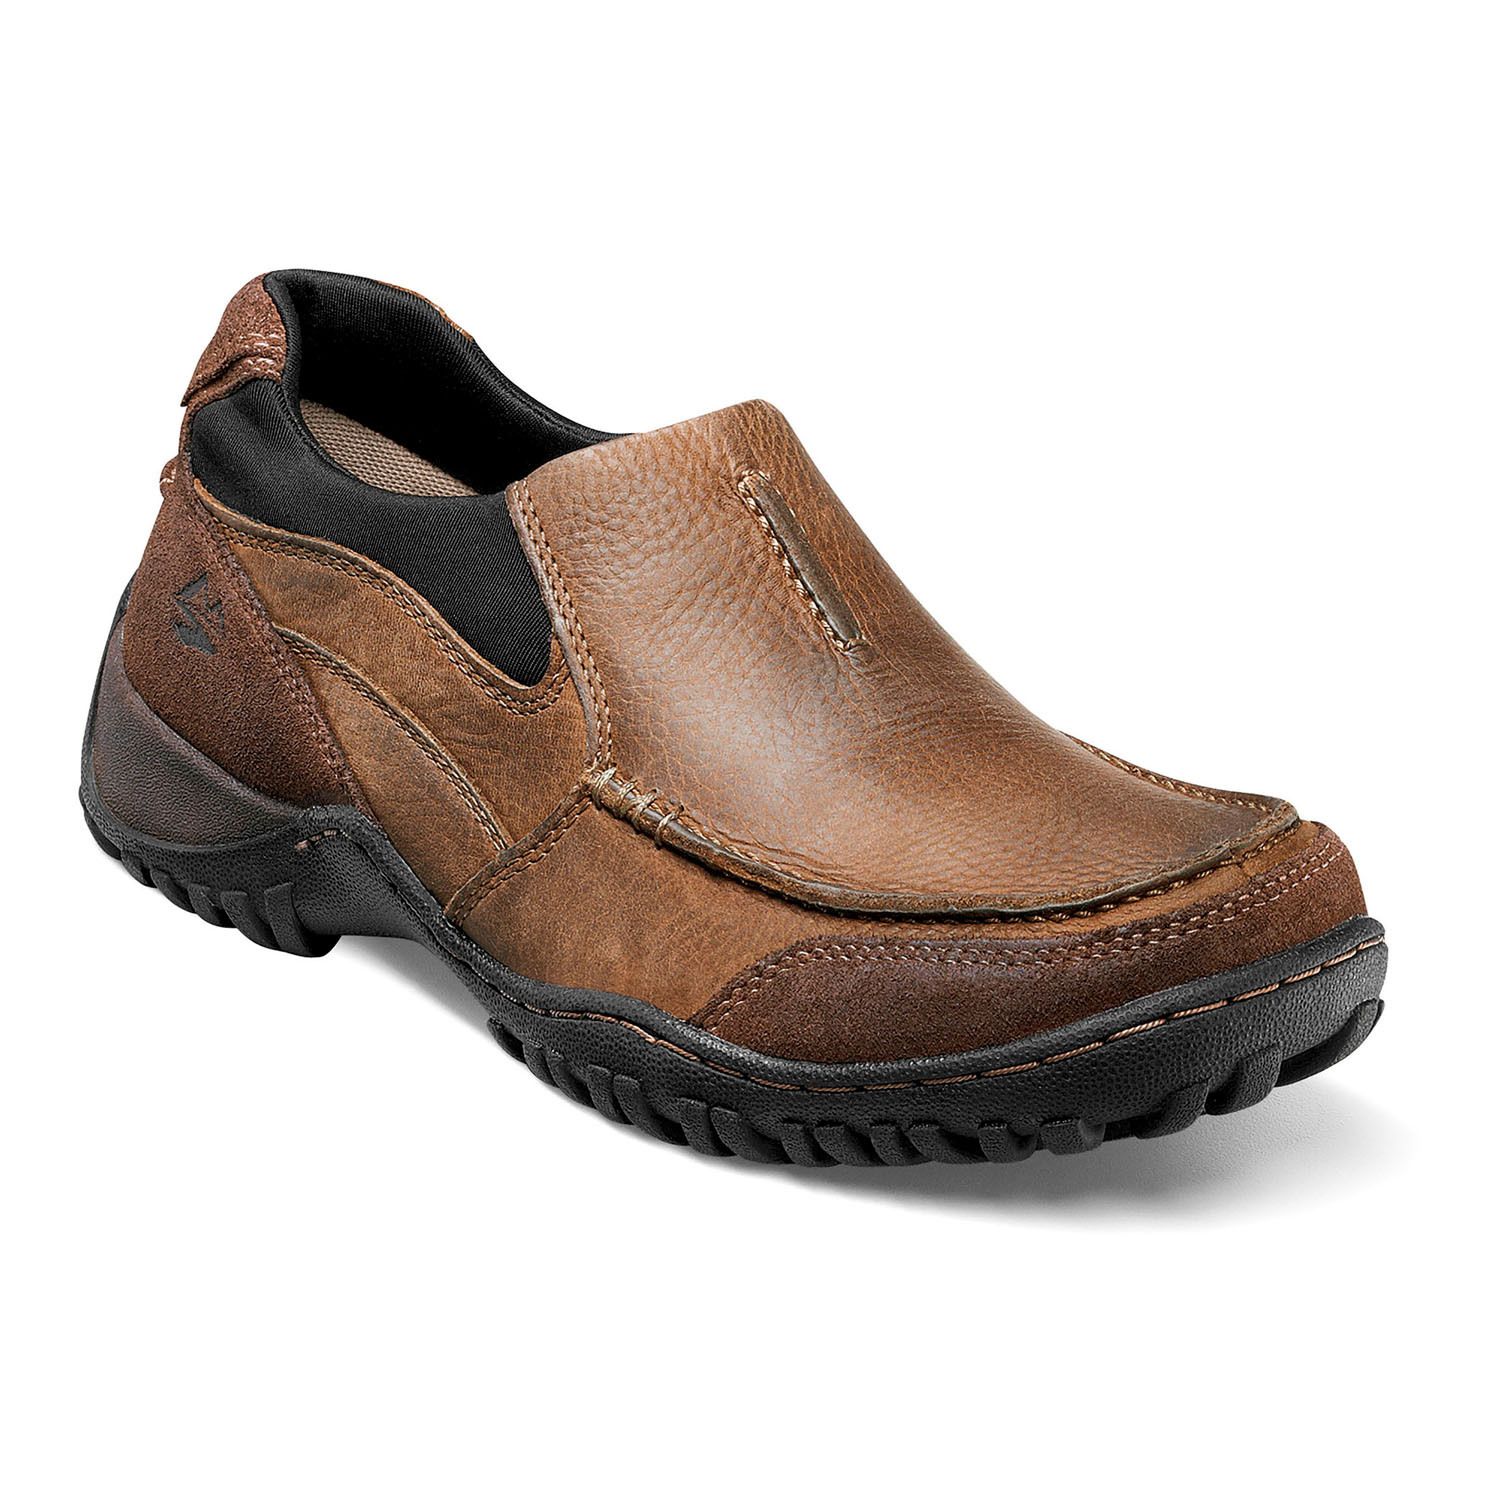 Portage Men's Moc-Toe Casual Slip-On Shoes